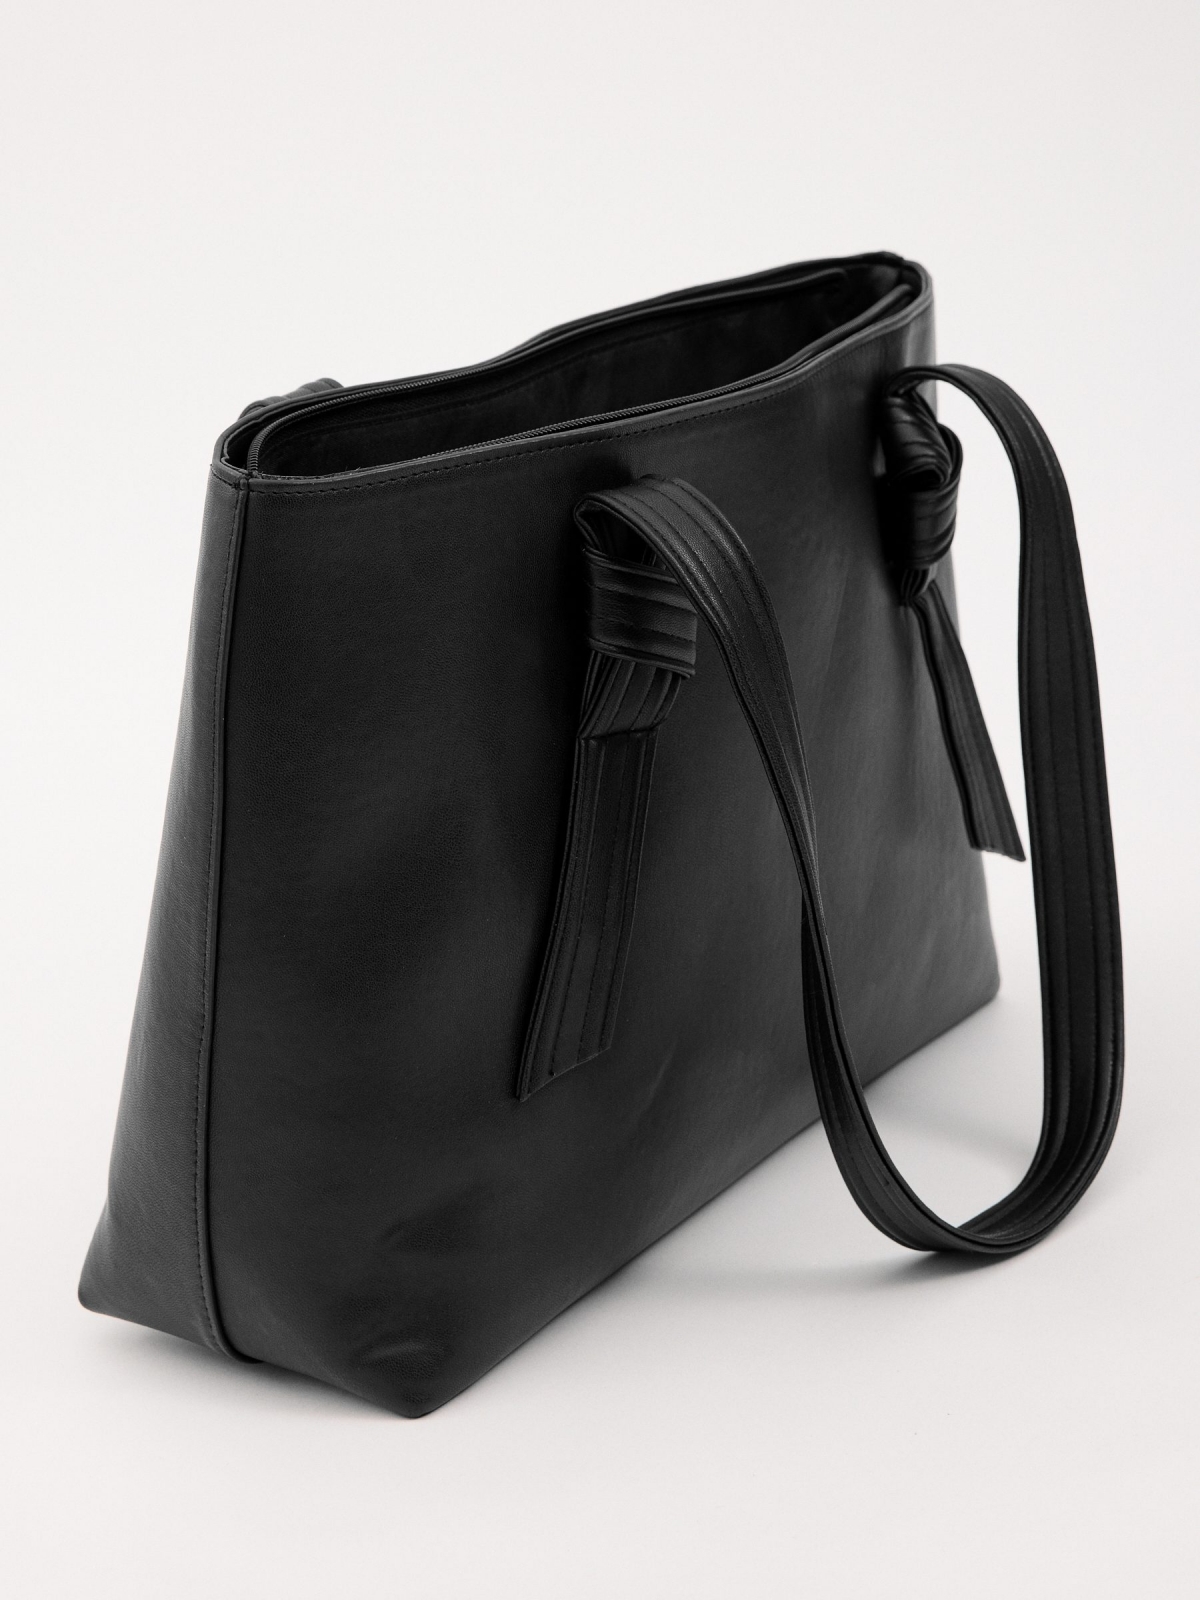 Black tote bag black detail view